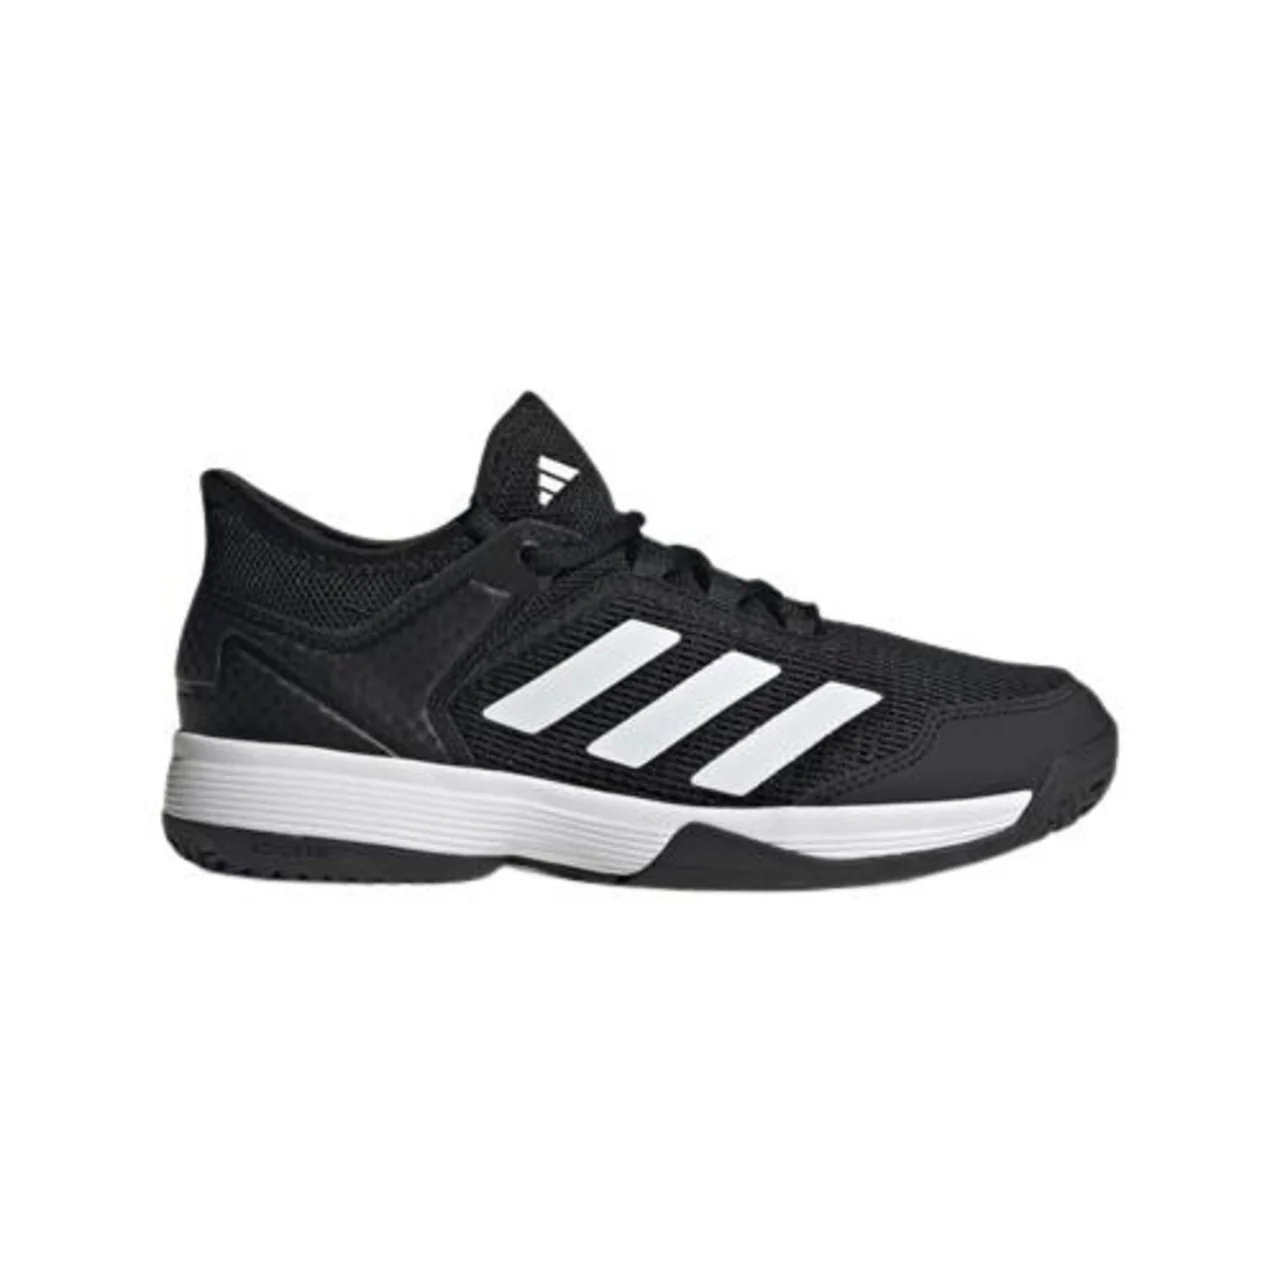 Adidas Ubersonic 4k Junior Black